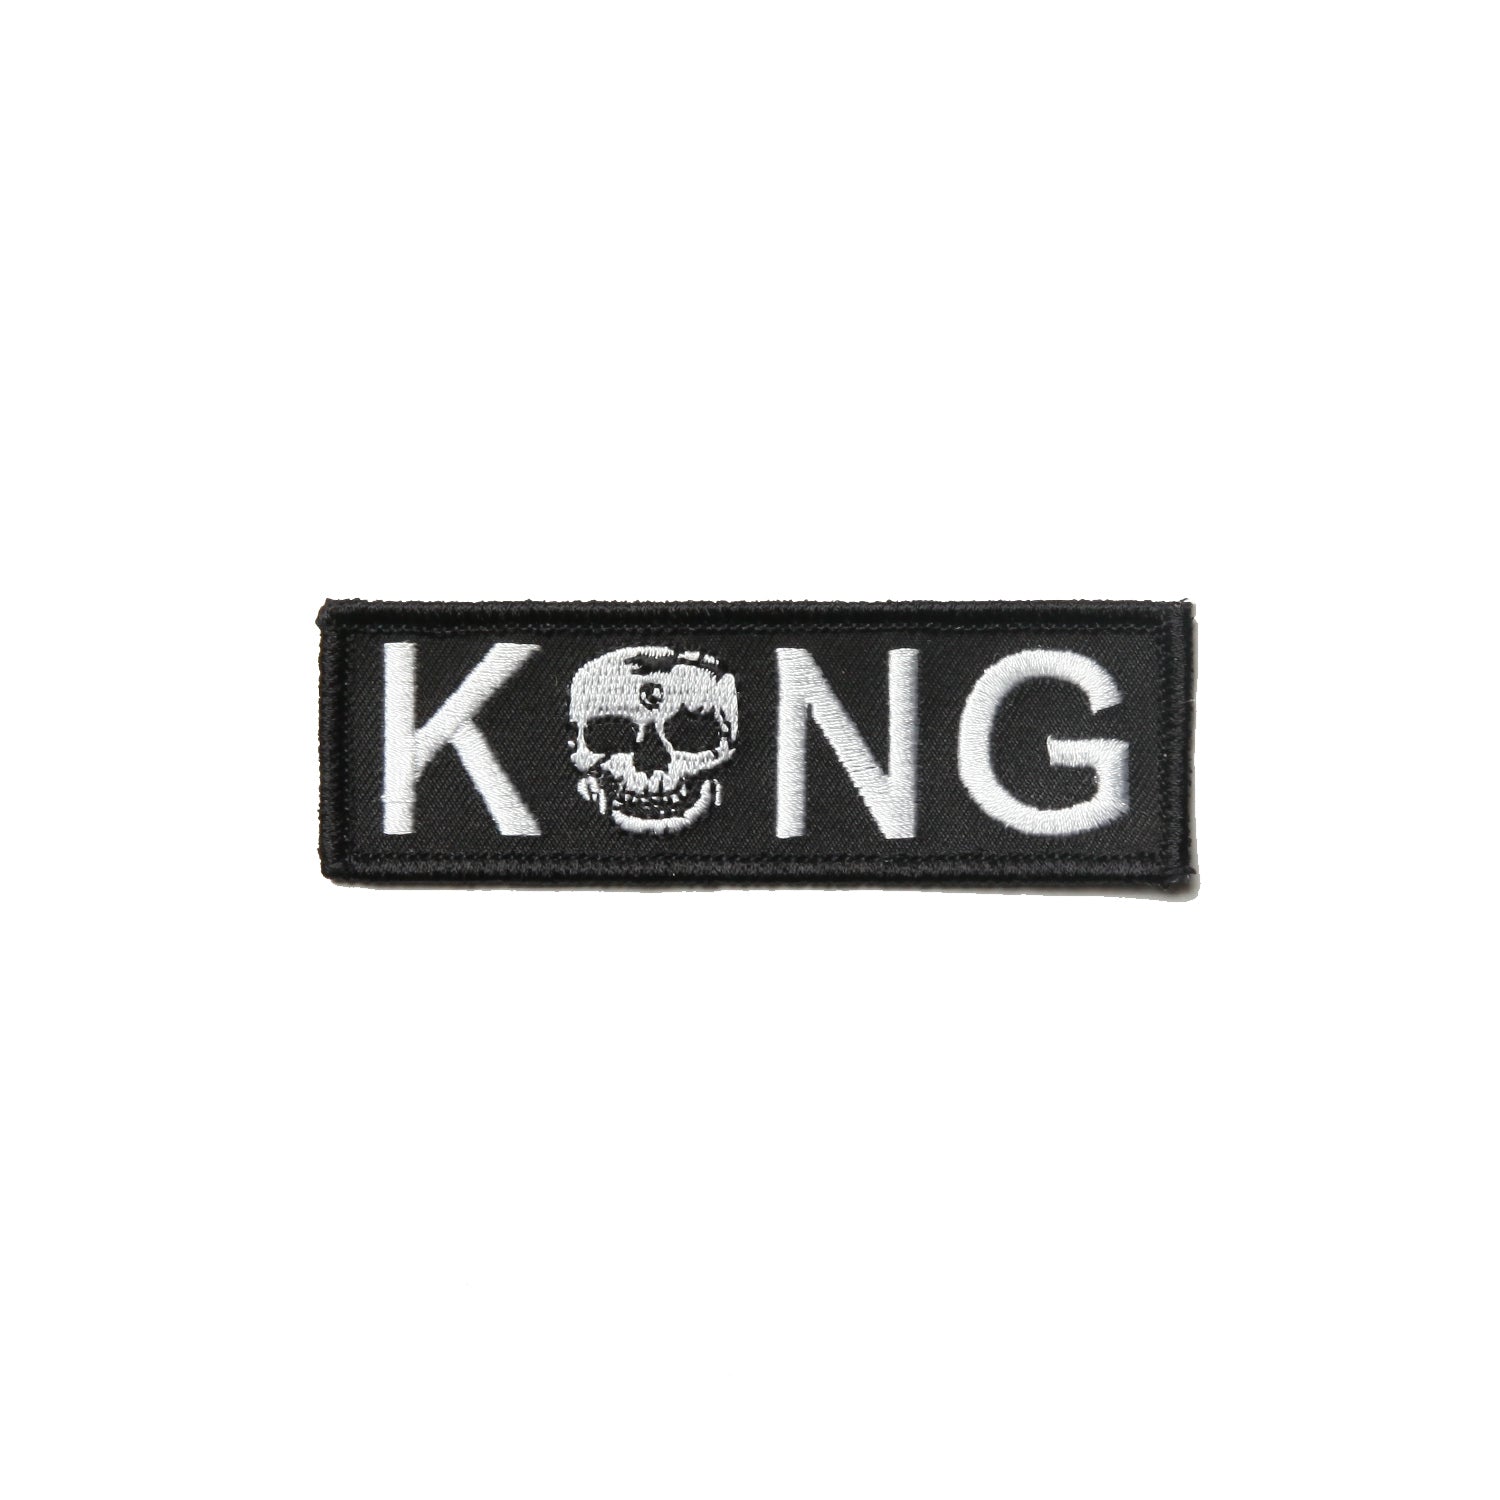 Kong Skull Box Logo Patch Black